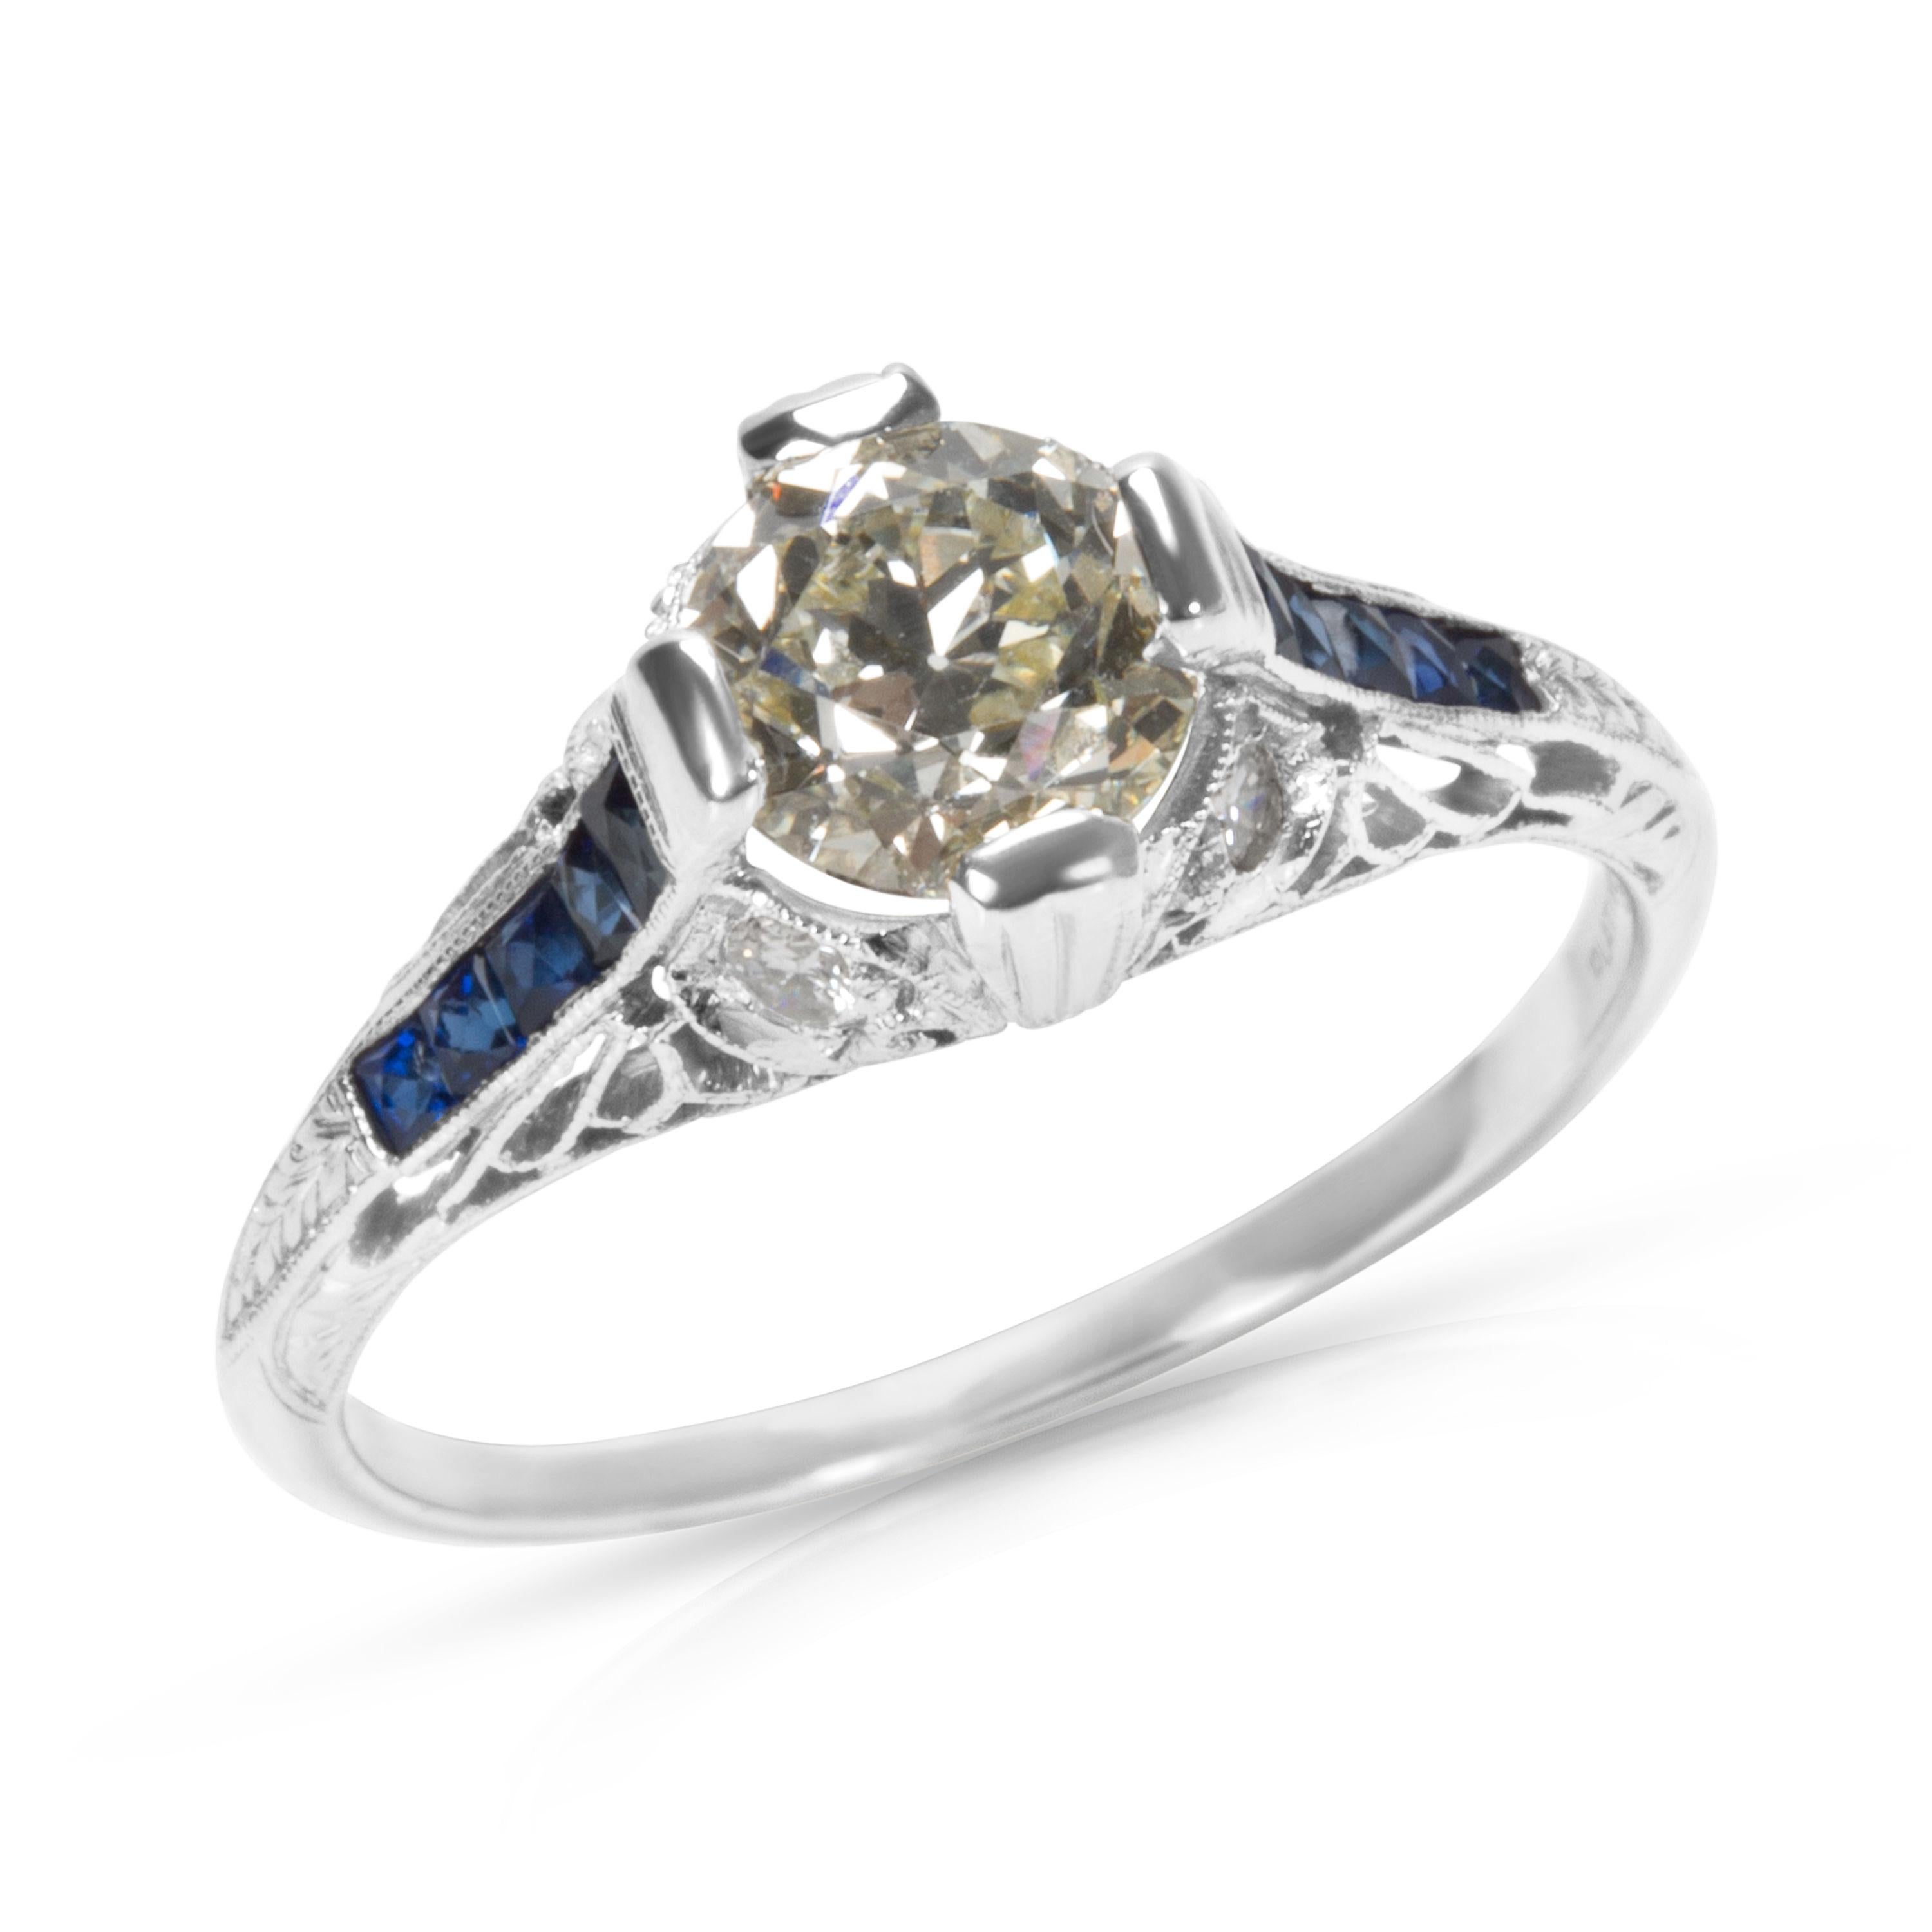 IGL Certified Art Deco Estate Diamond and Sapphire Engagement Ring in Platinum 1